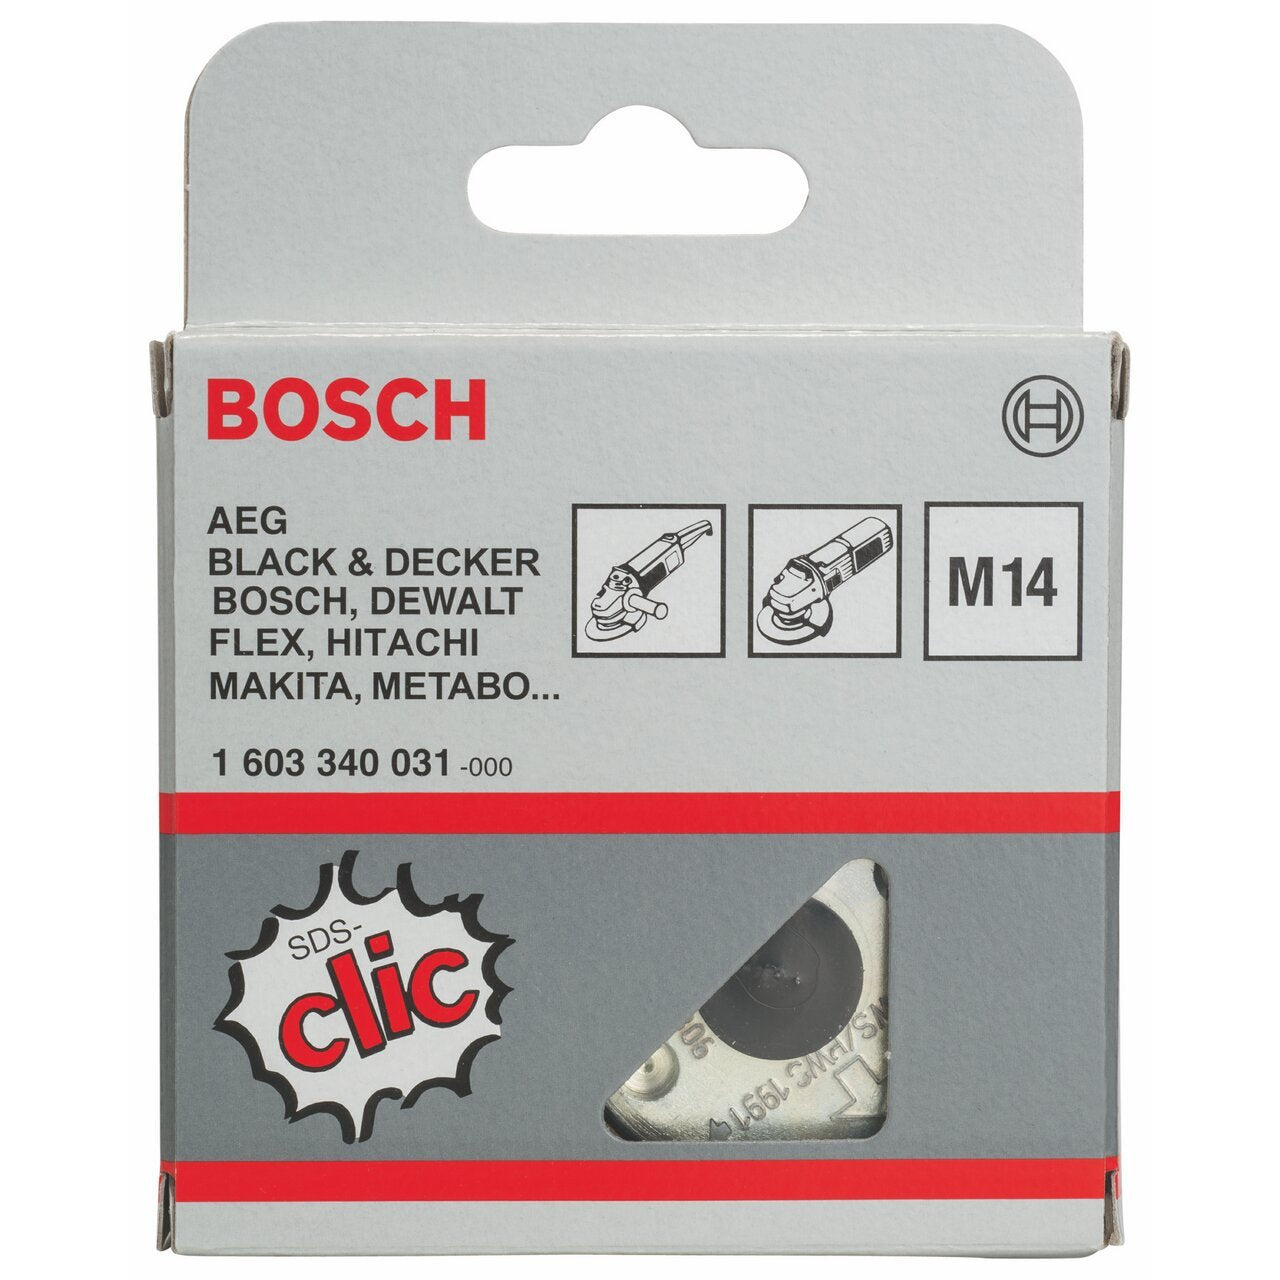 Ghiera Sds Clic Bosch M14 rapida x smerigliatrici Universale